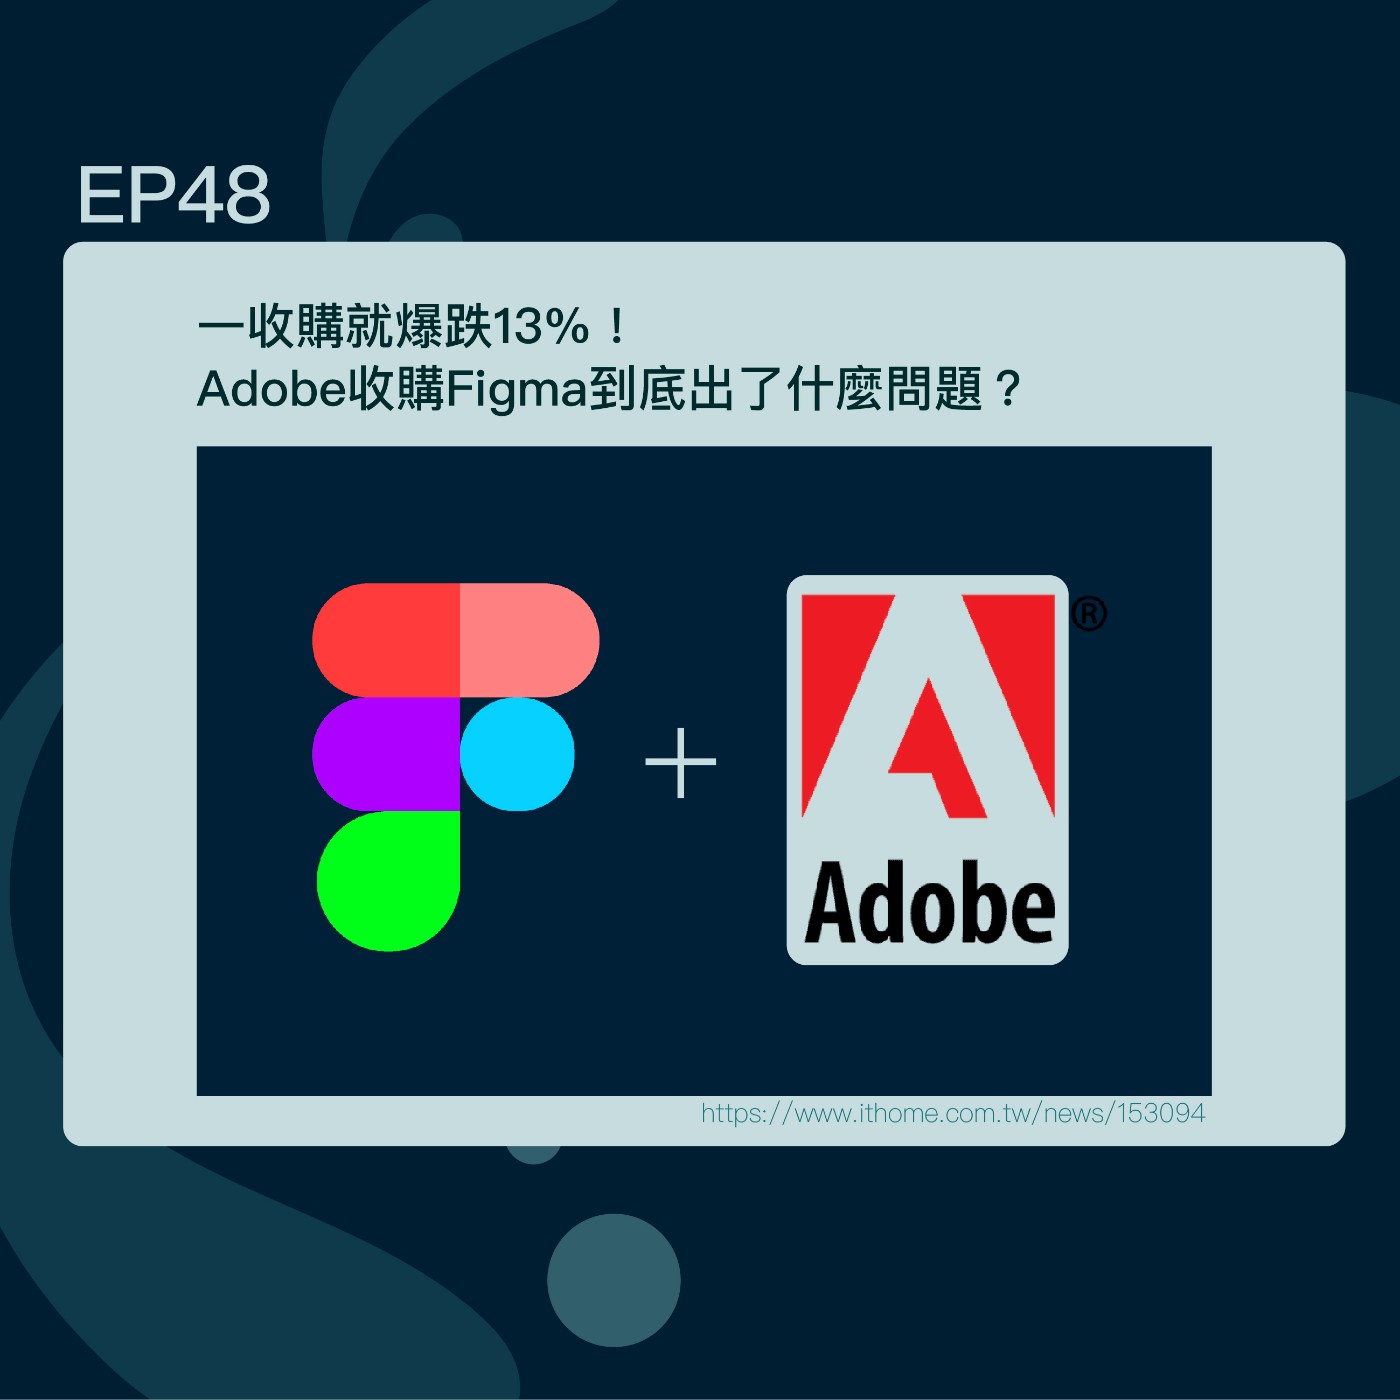 EP48 一收購就爆跌13%！Adobe收購Figma到底出了什麼問題？